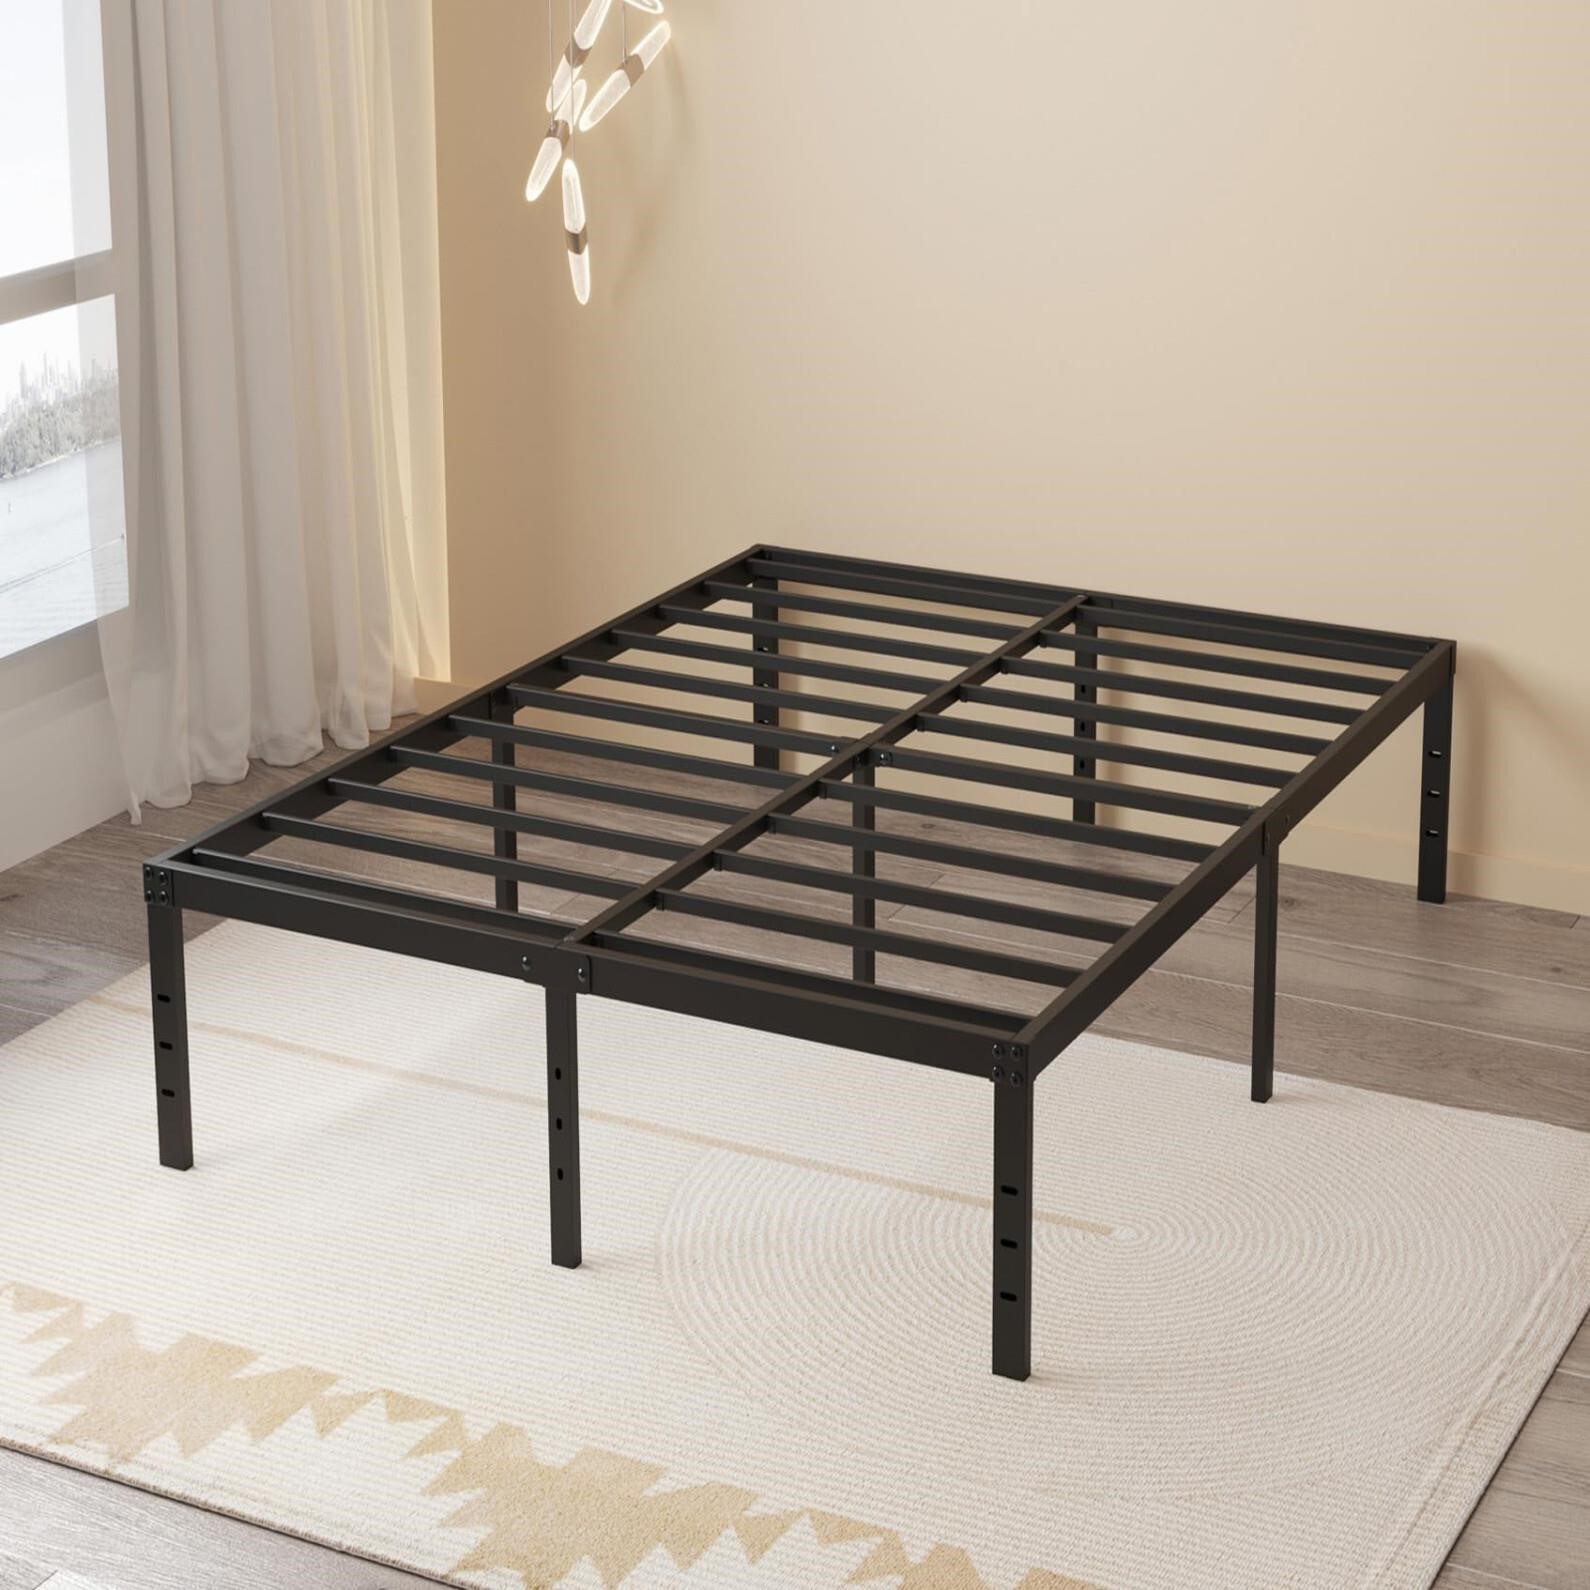 Maenizi Full Size Bed Frame No Box Spring Needed,